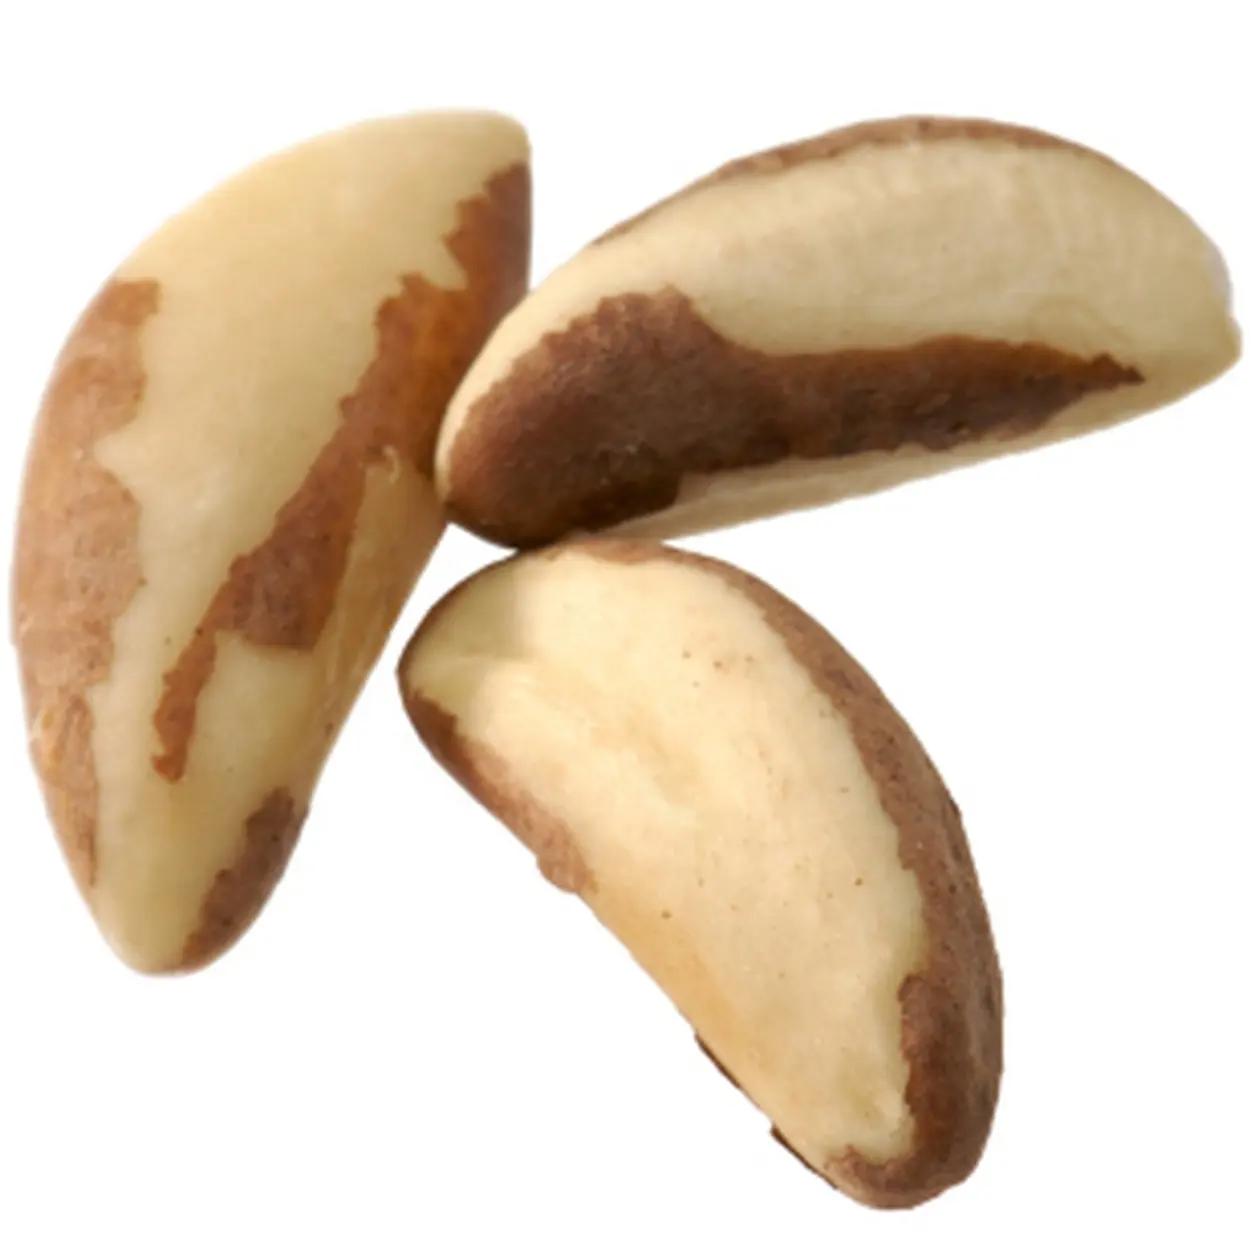 100% cheap price Brazil Nuts / Raw brazil nuts